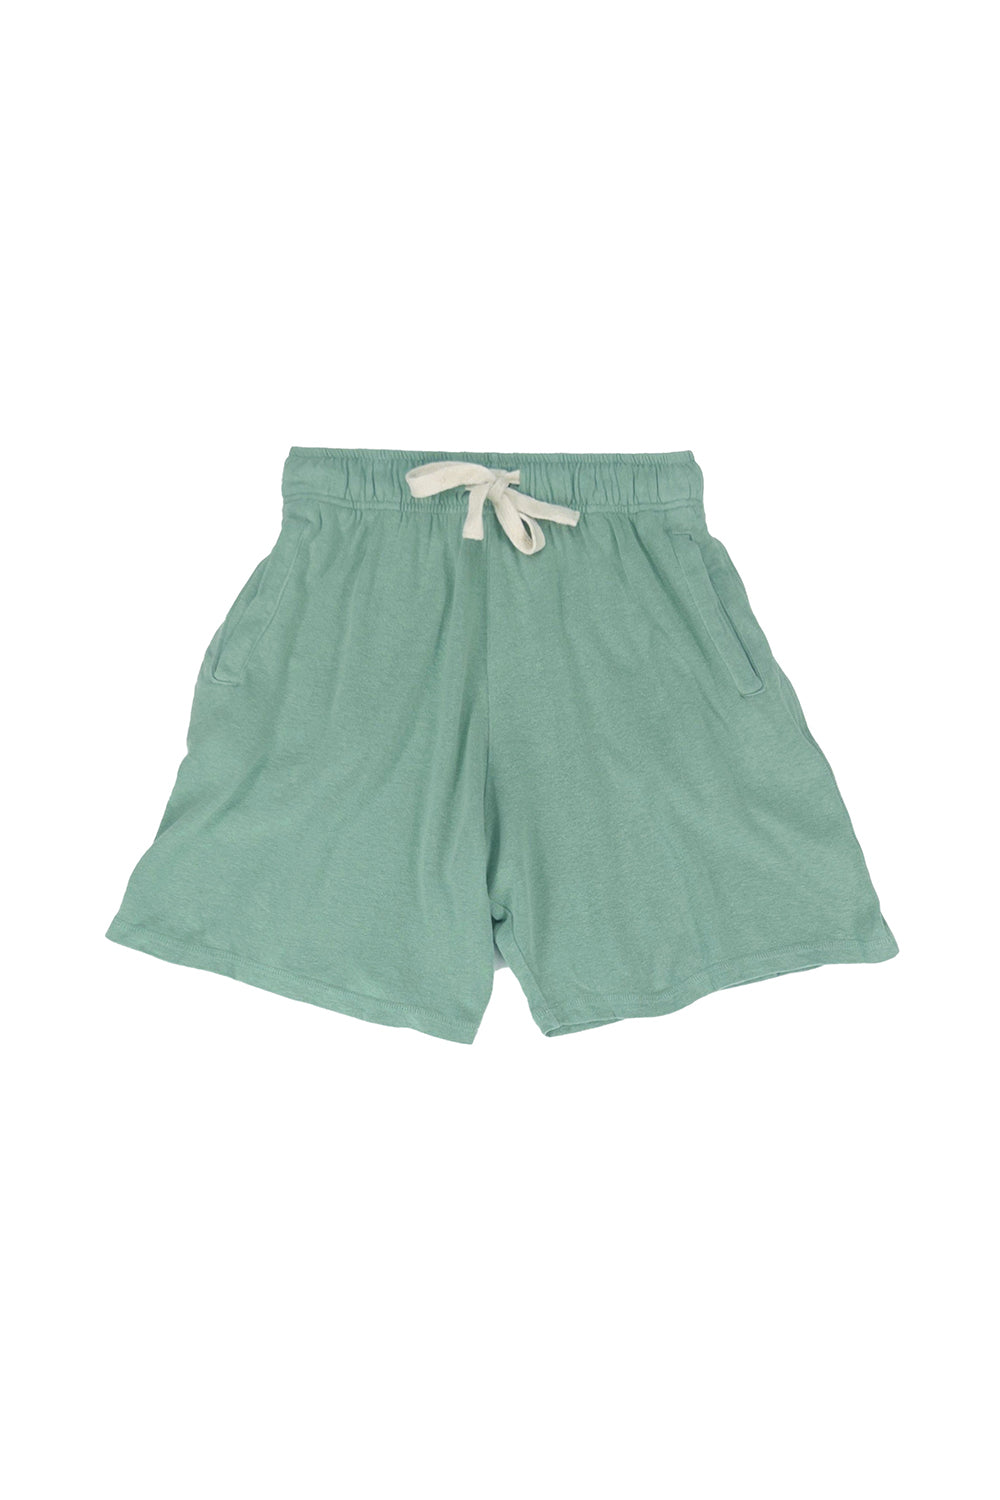 colored shorts  Mint green shorts, Fashion, Green shorts outfit